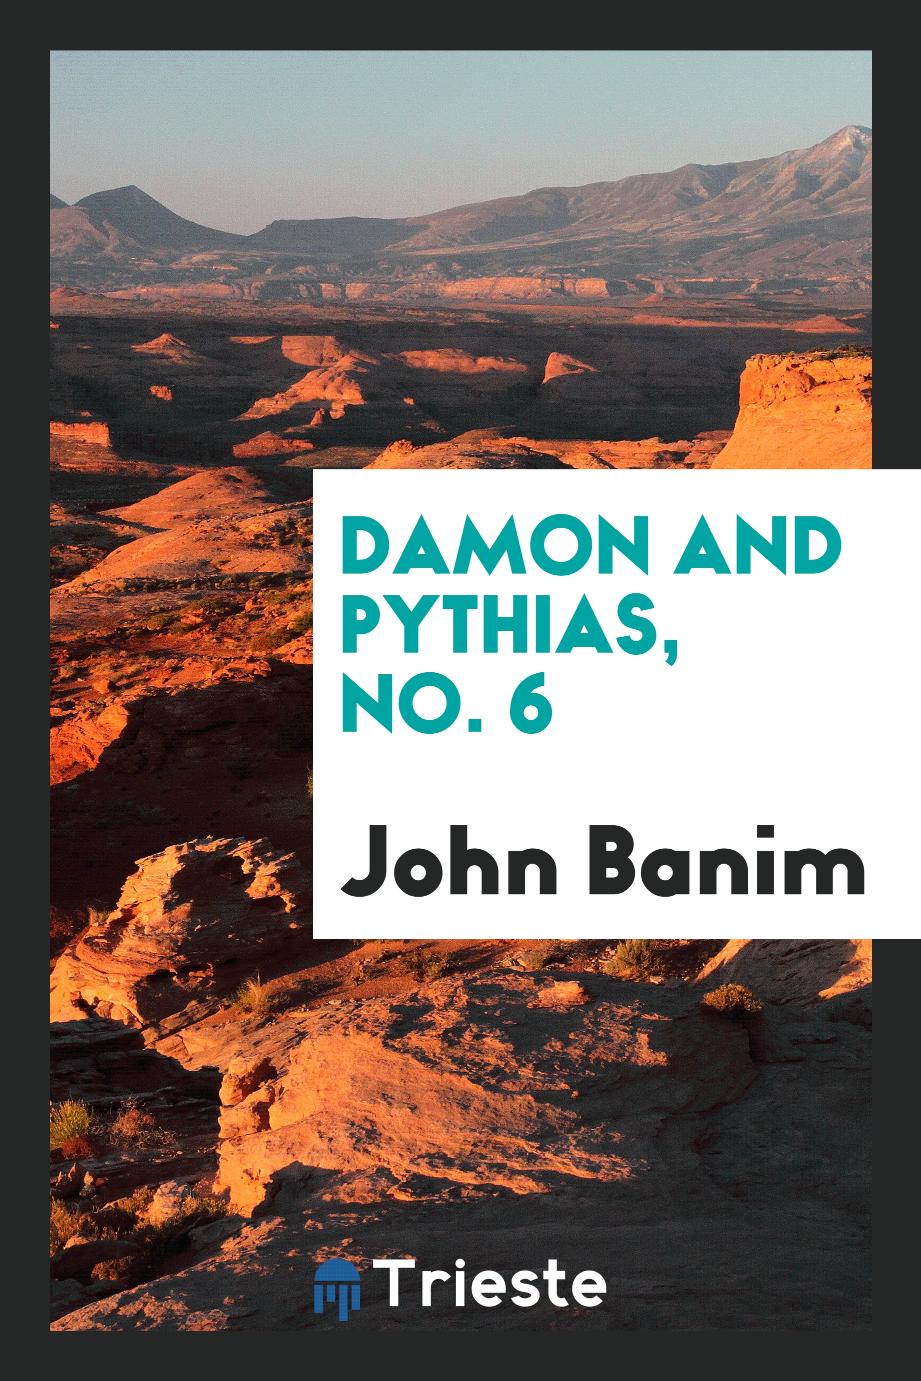 Damon and Pythias, No. 6